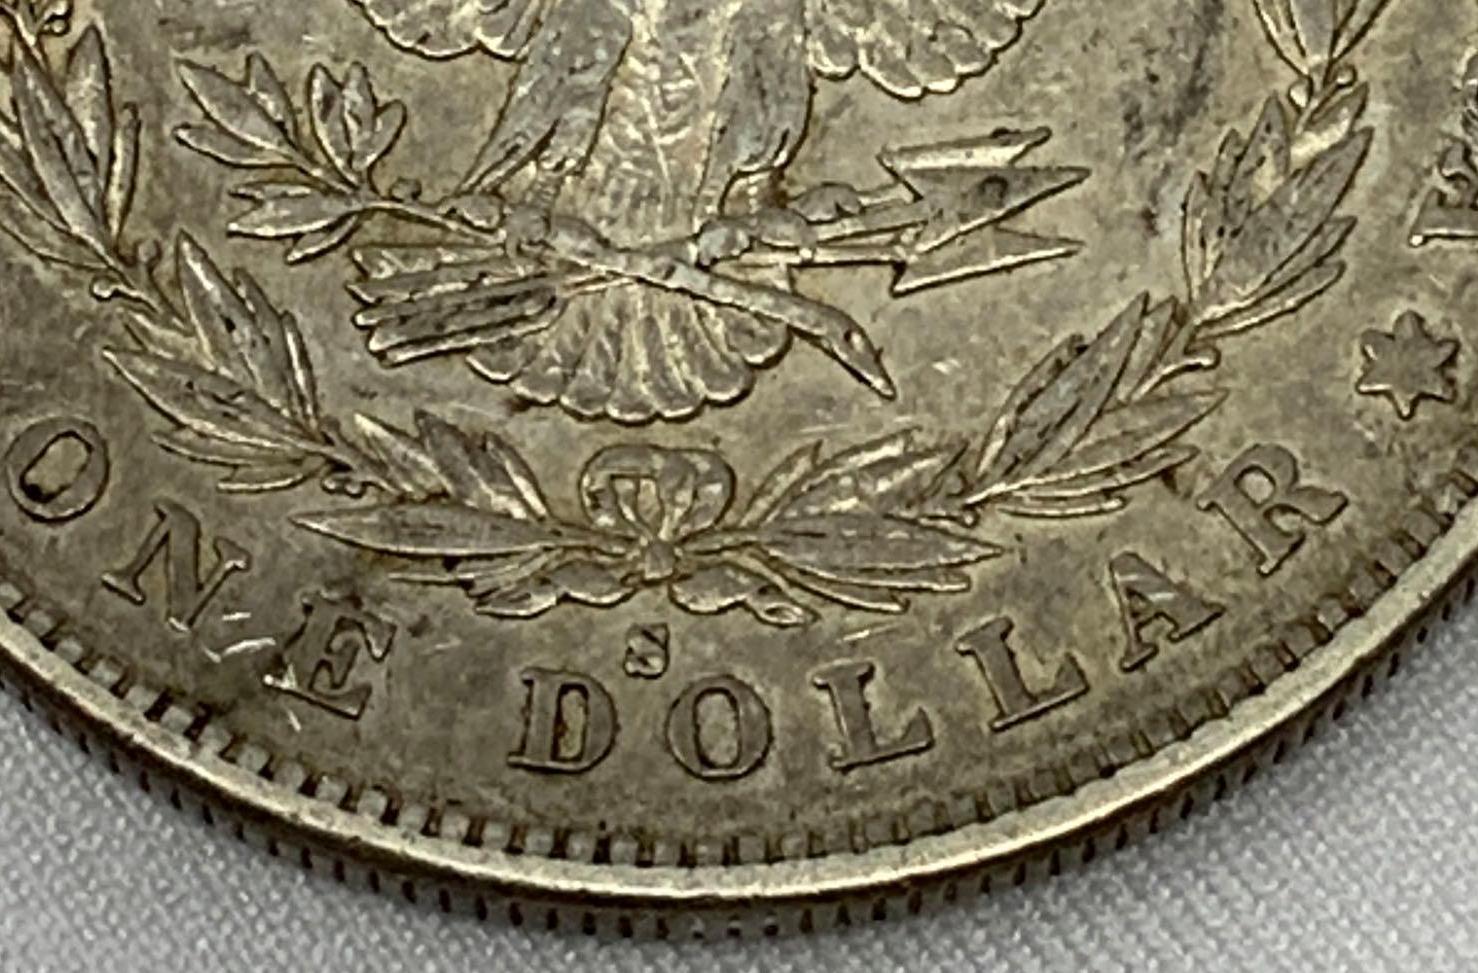 1880-S MORGAN SILVER DOLLAR